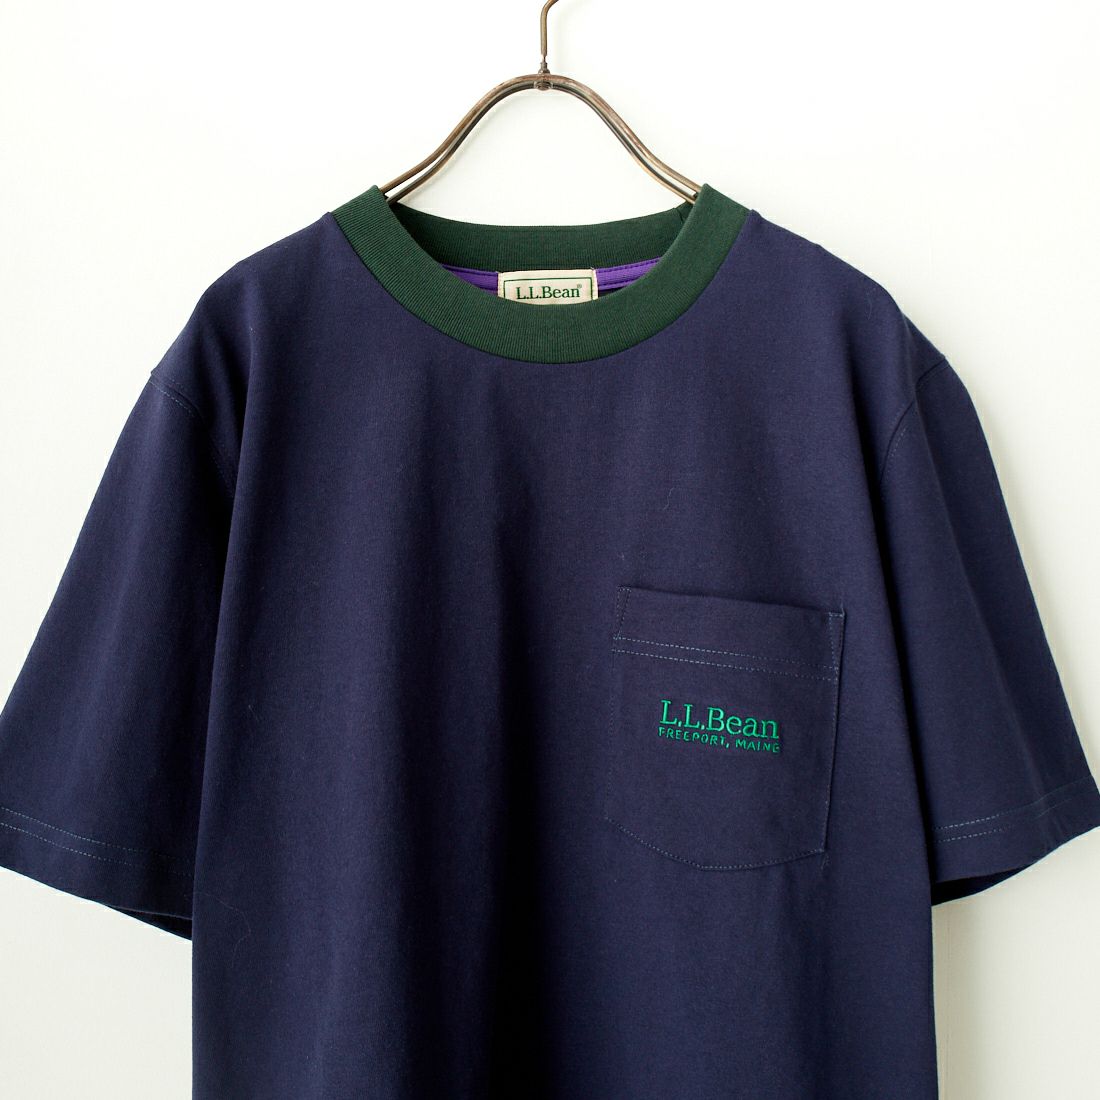 L.L.BEAN [エルエルビーン] リンガーポケットTシャツ [4275-6165] 91 NAVY/GR